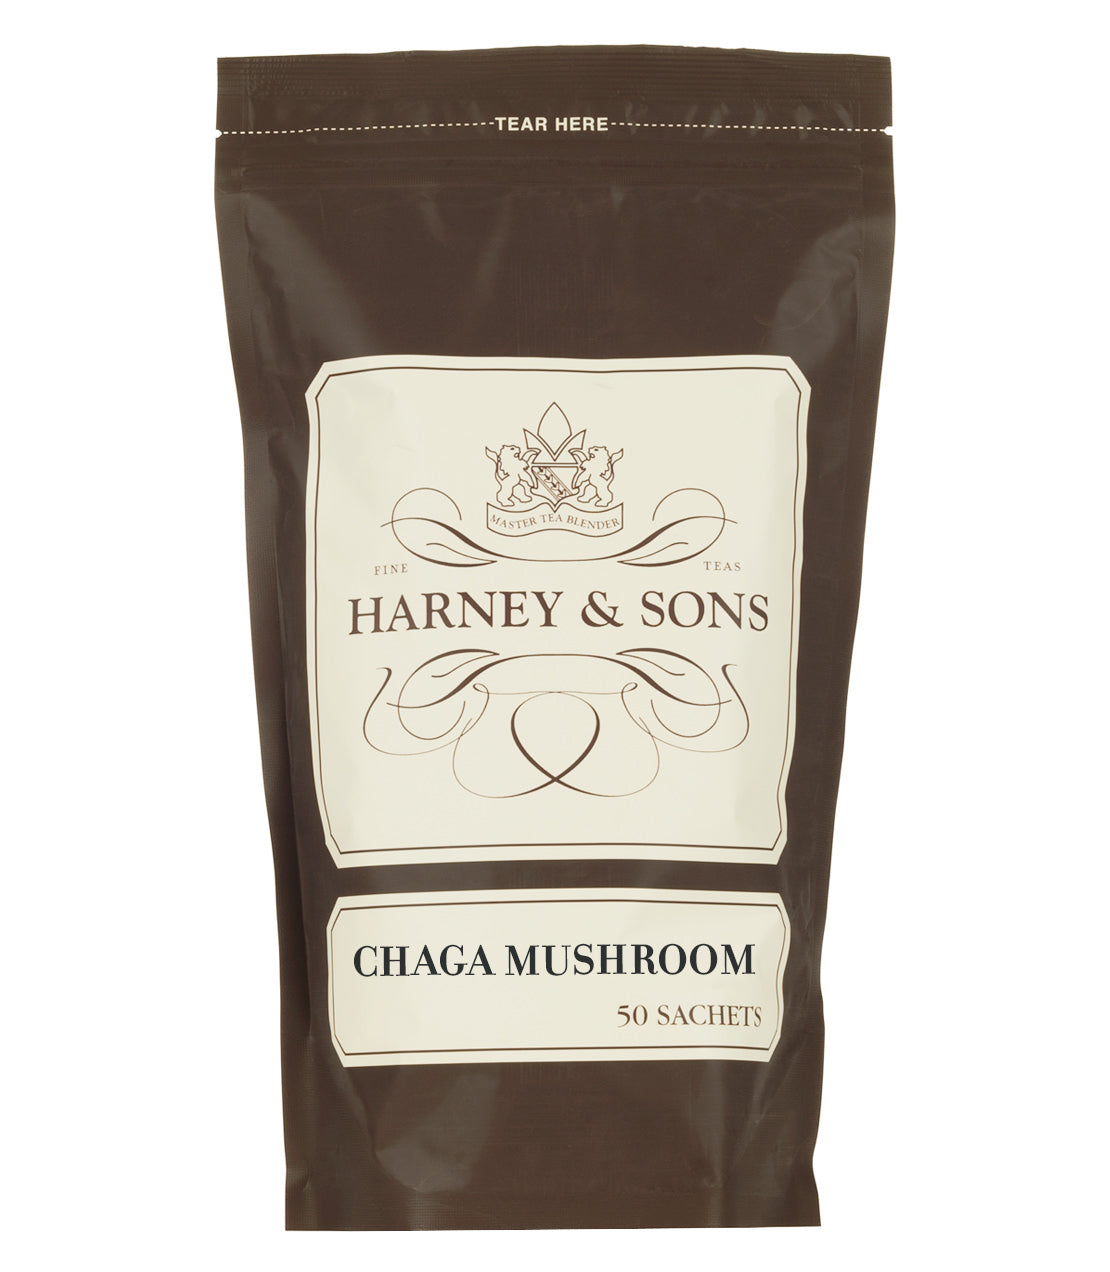 Chaga Mushroom - Sachets Bag of 50 Sachets - Harney & Sons Fine Teas